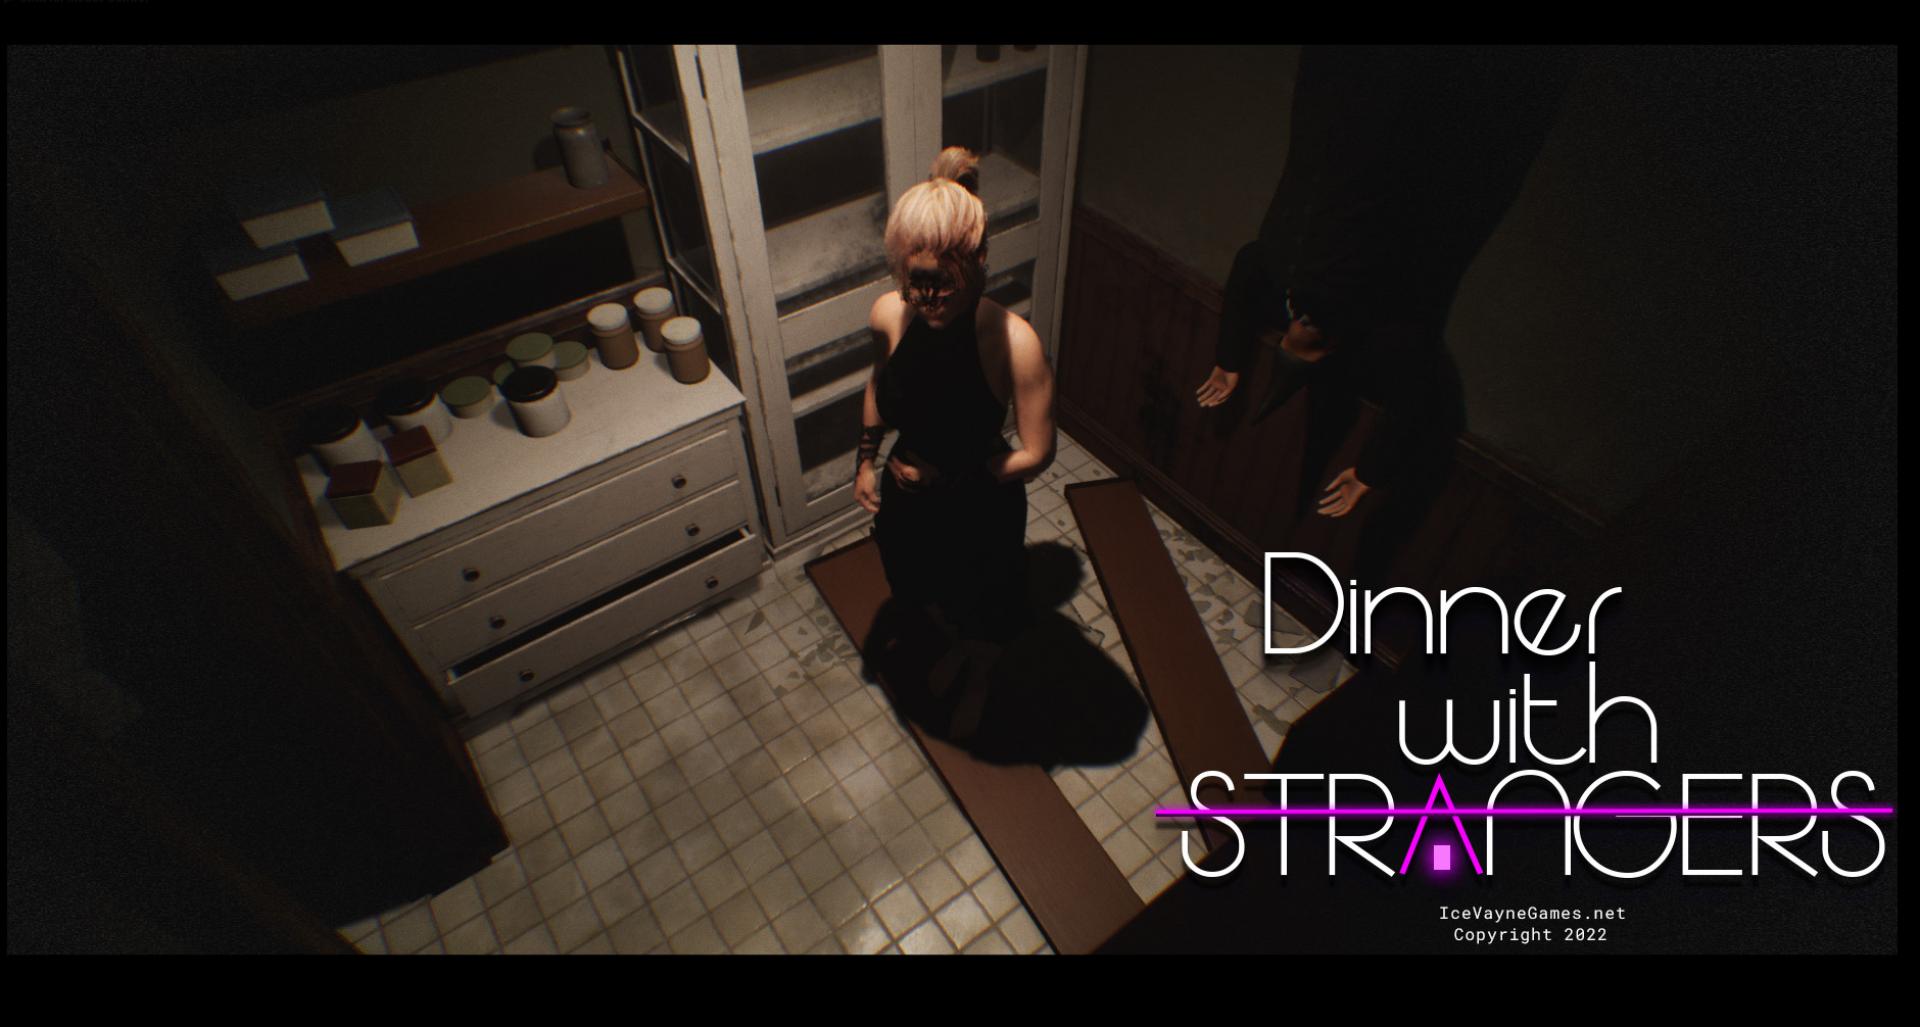 NYX Game Awards - Dinner with Strangers